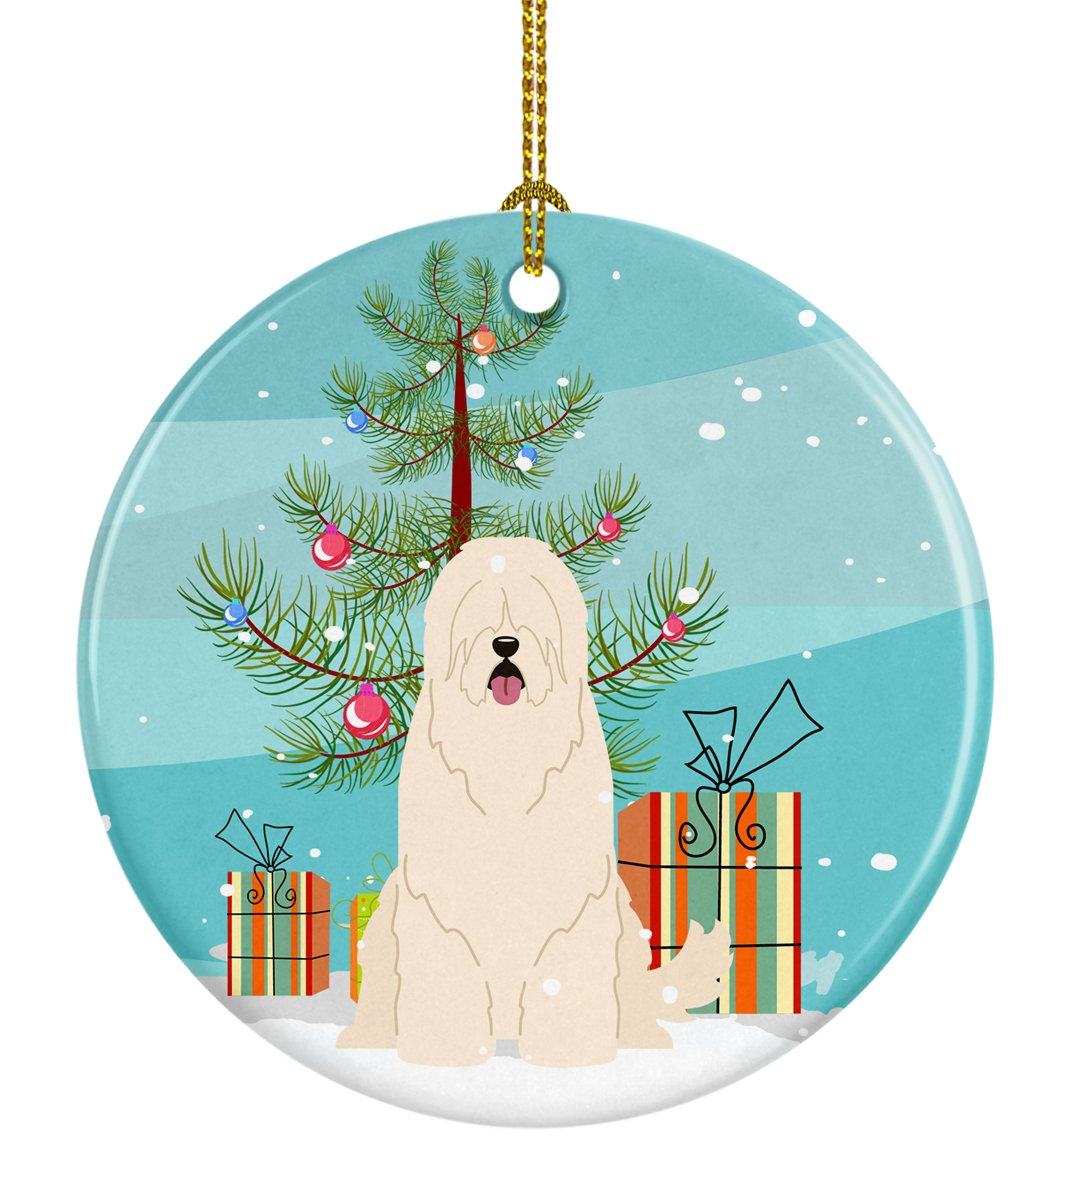 Merry Christmas Tree South Russian Sheepdog Ceramic Ornament BB4149CO1 by Caroline's Treasures